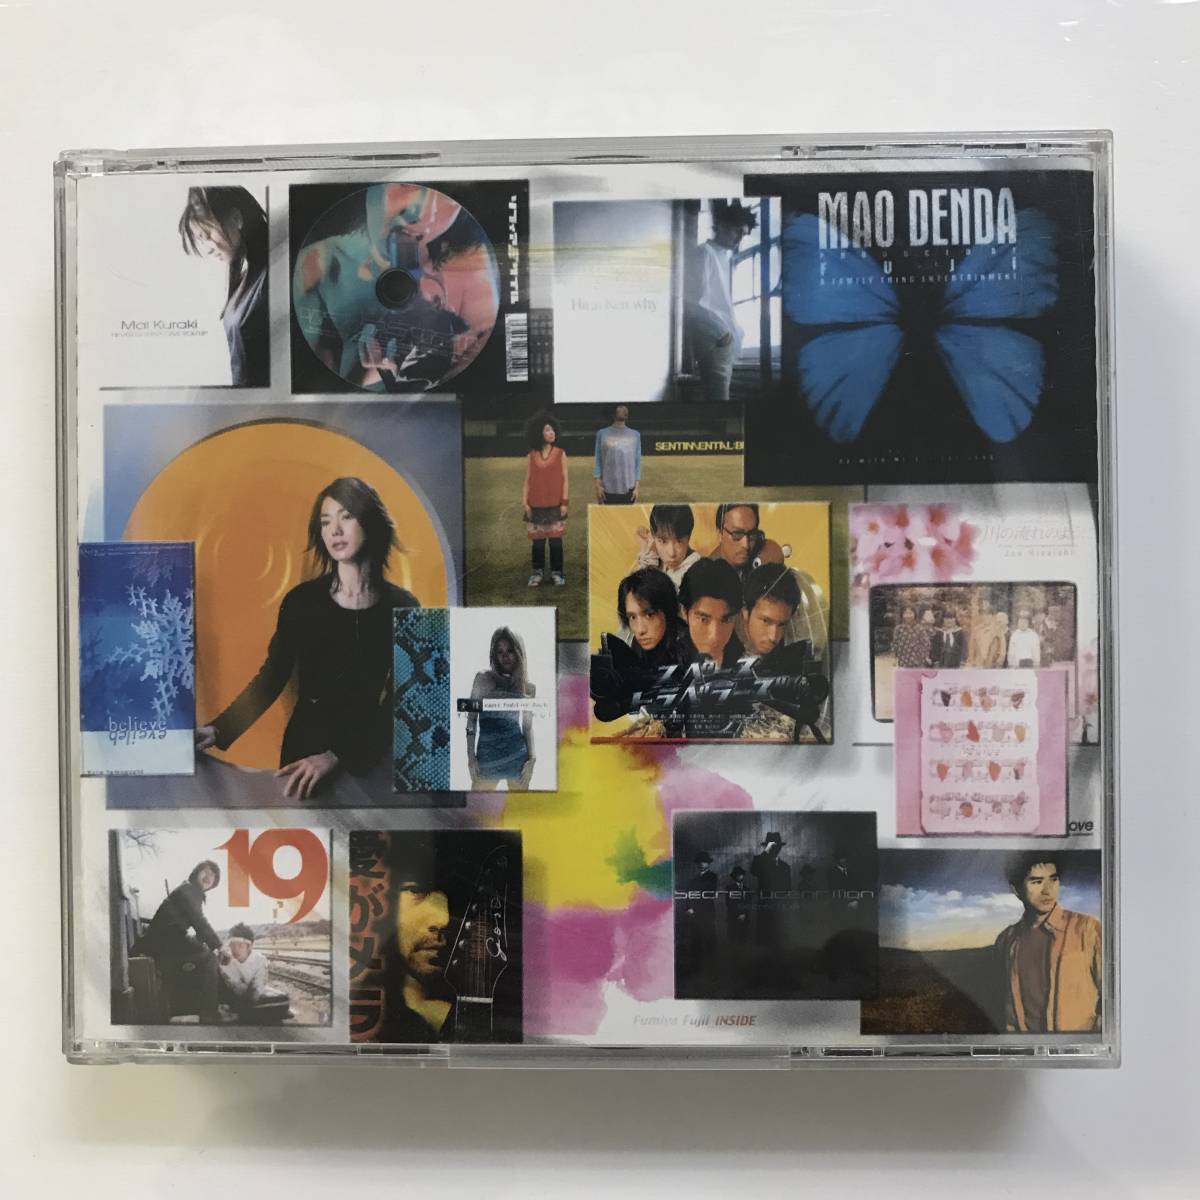 [CD] Мао Денда / Токио сейчас 3CD @SO-38